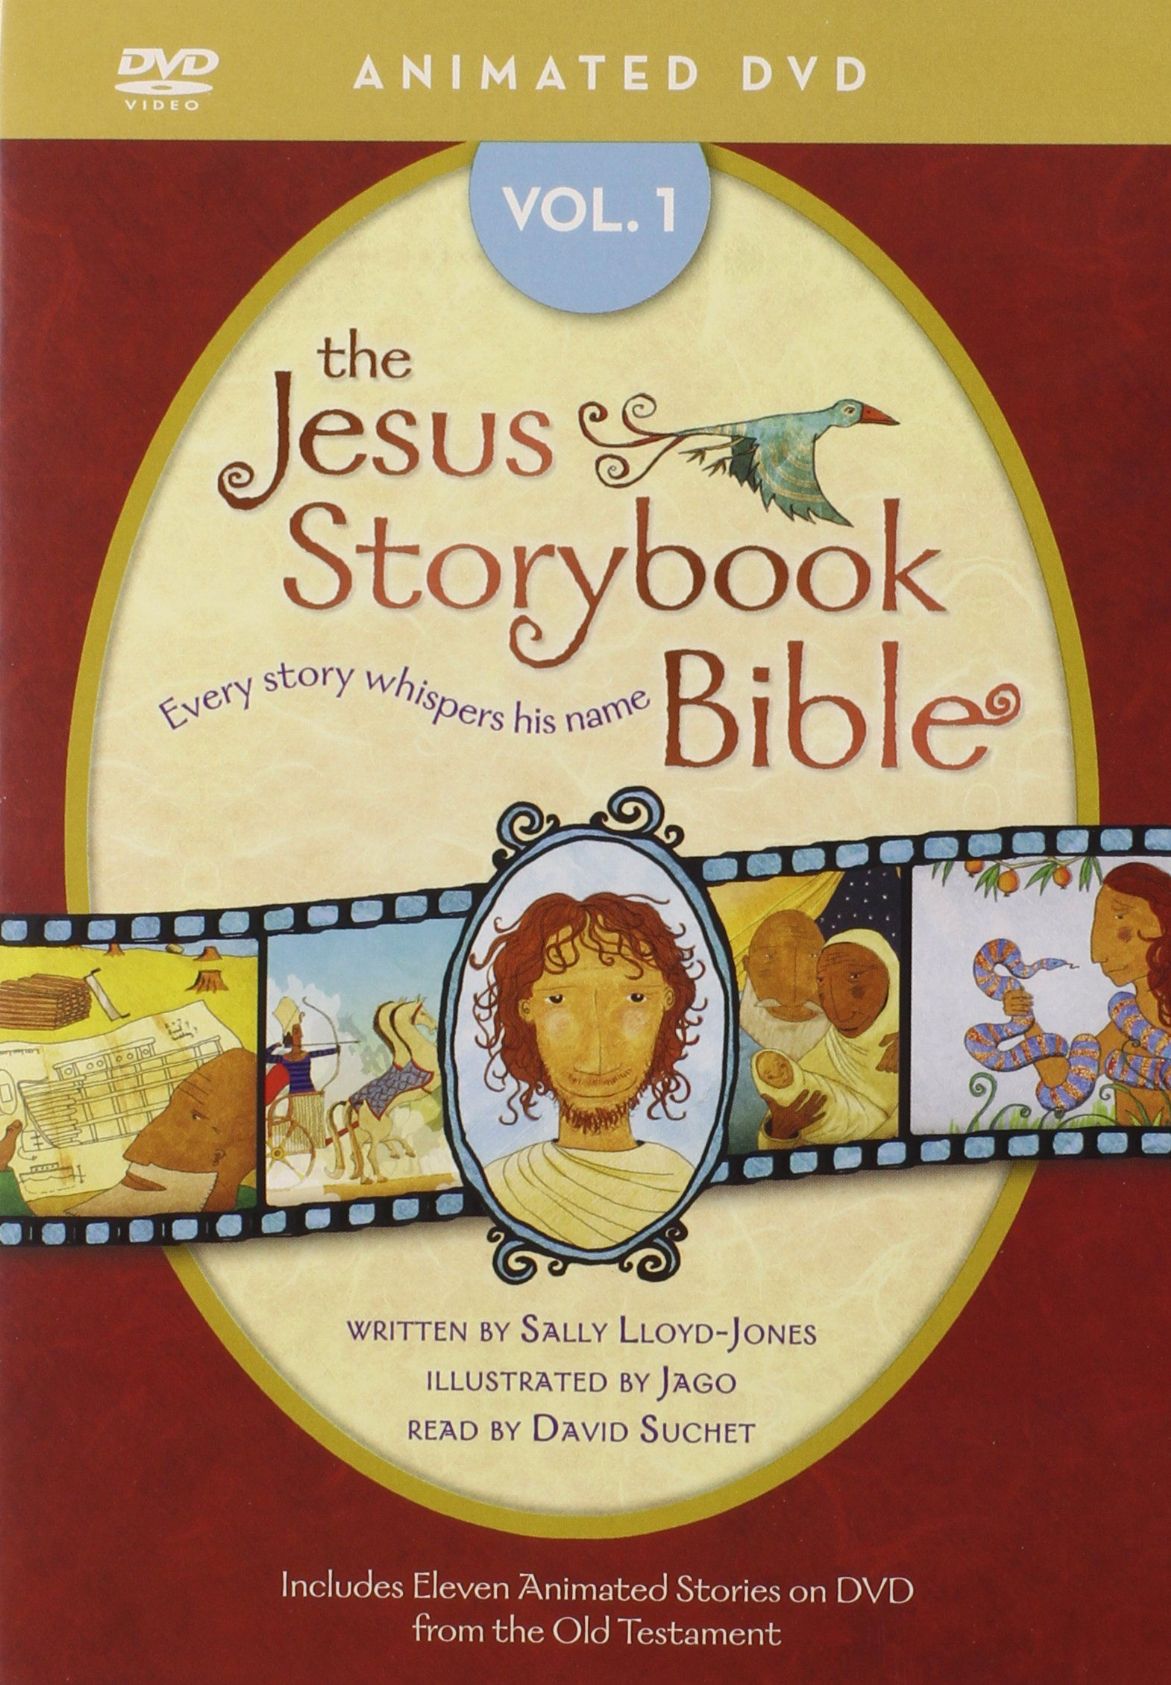 The Jesus Storybook Bible Animated DVD Volume 1